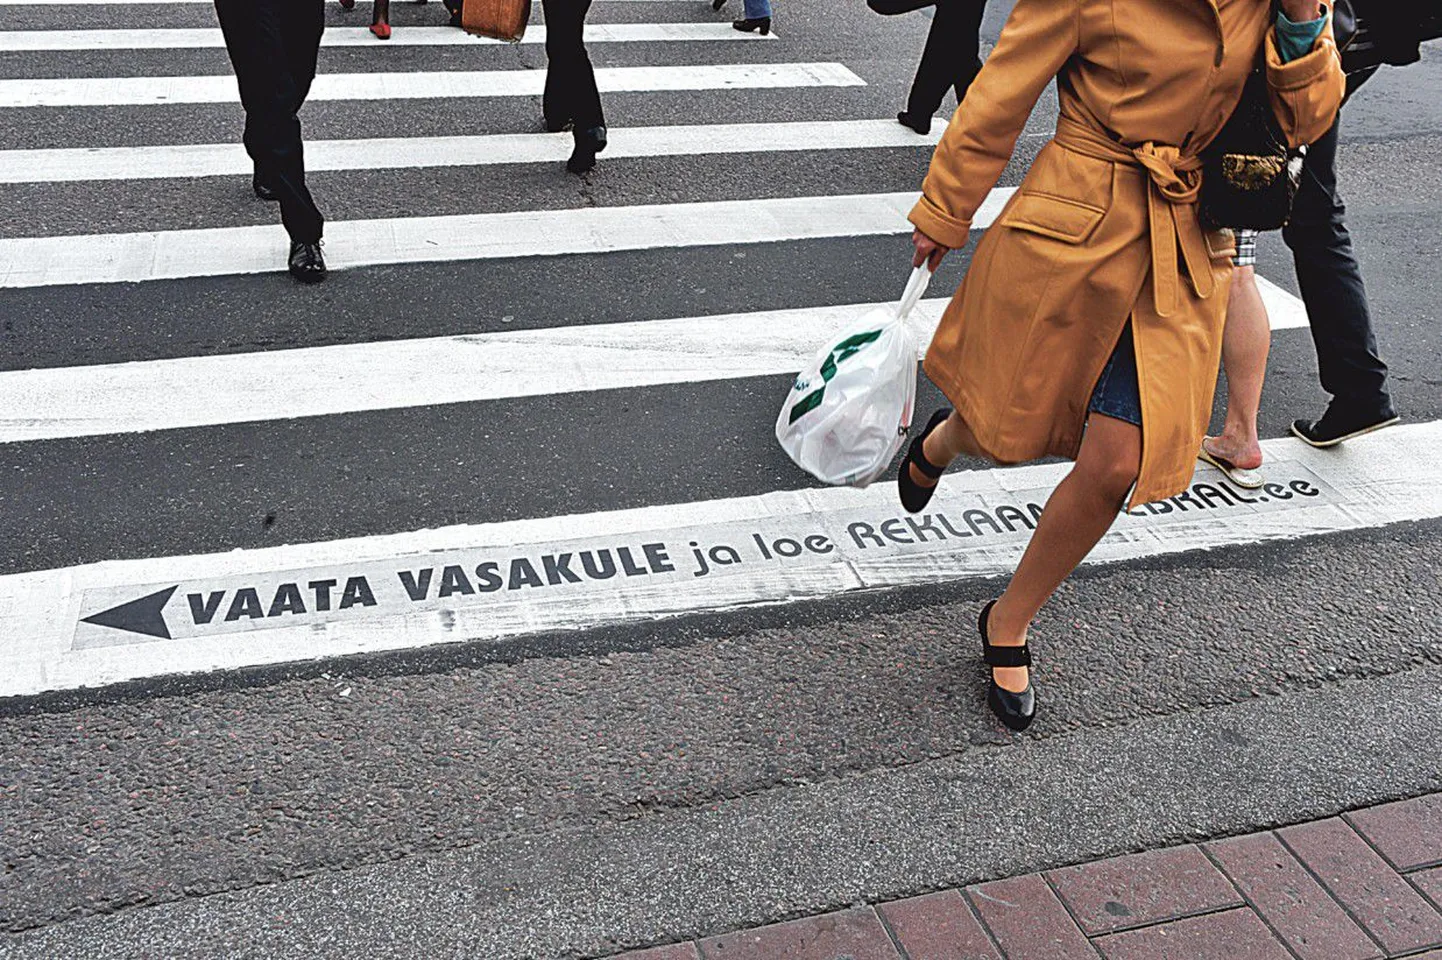 Рекламная надпись на пешеходном переходе в центре Таллинна на бульваре Рявала.